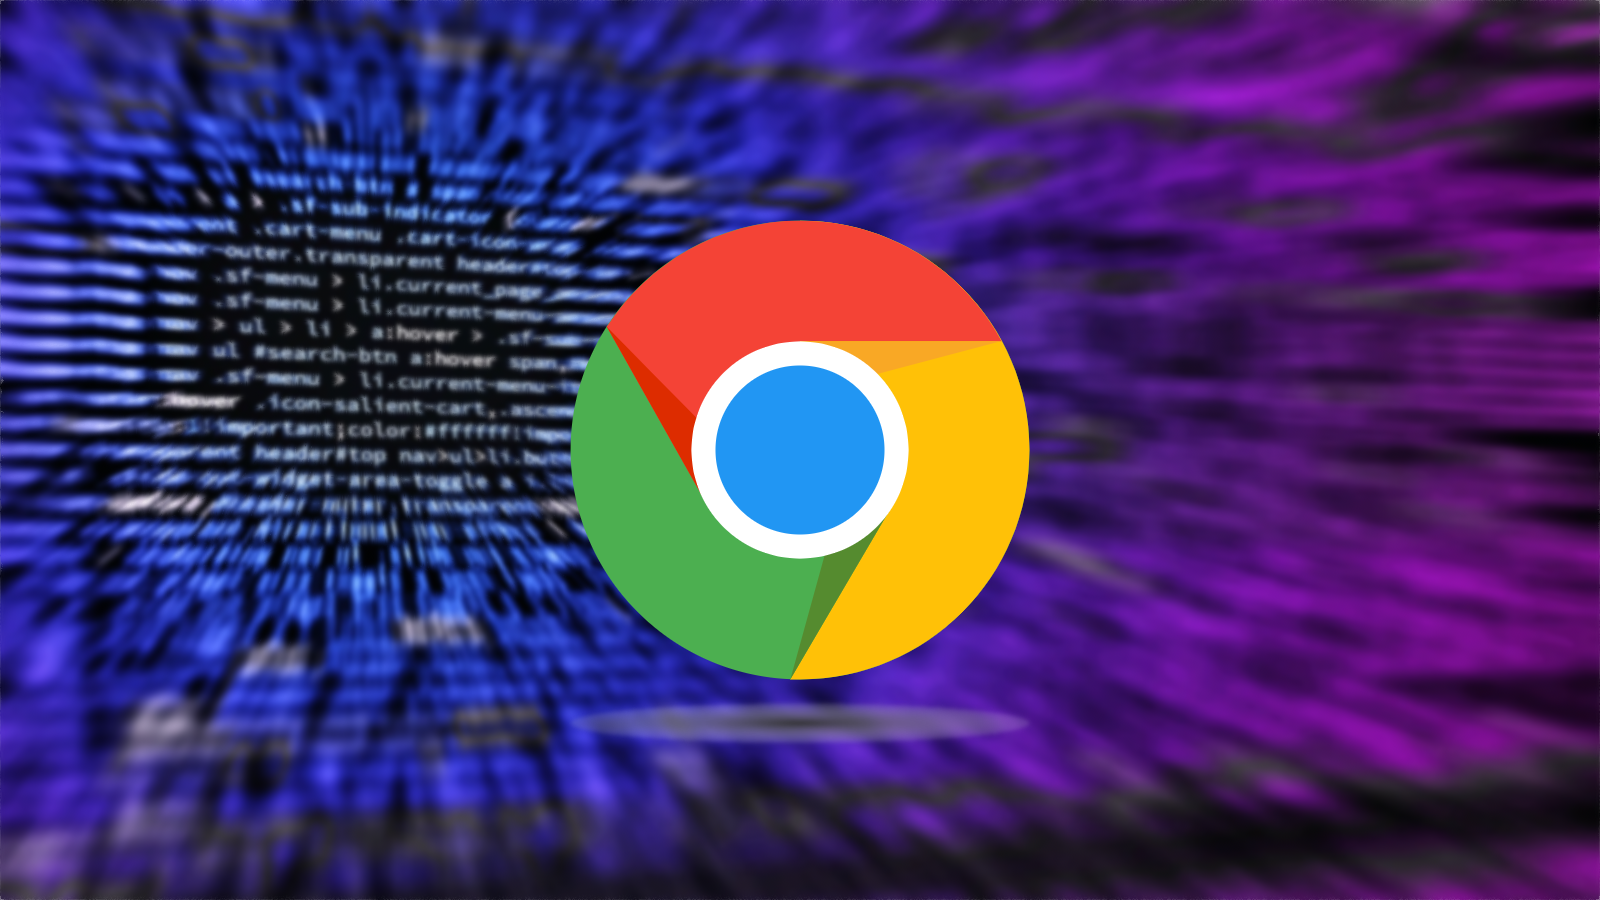 Chrome fixes 0-day vulnerabilities